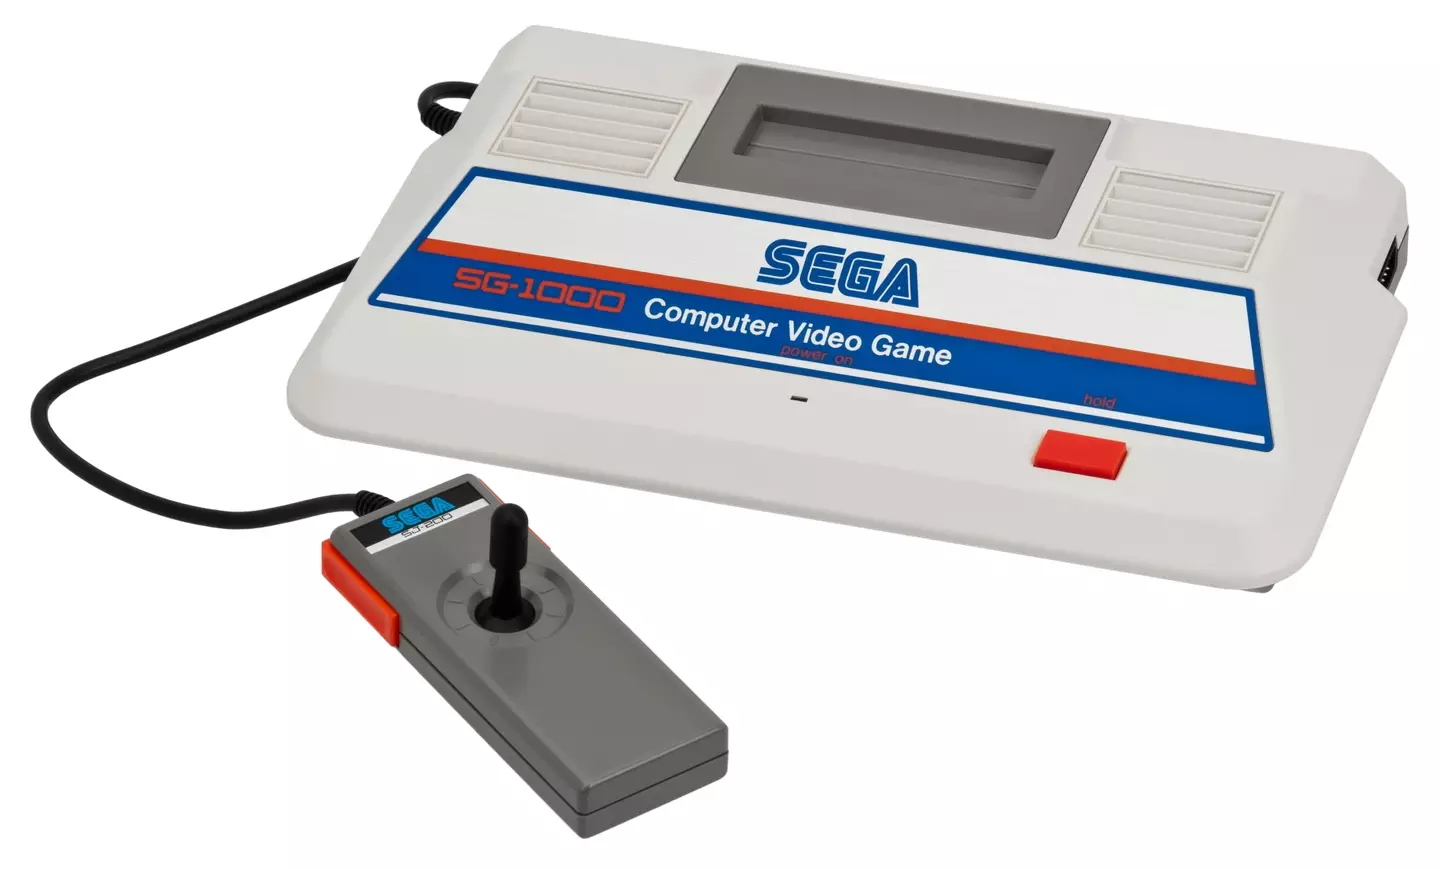 The SG-1000, SEGA's first console /